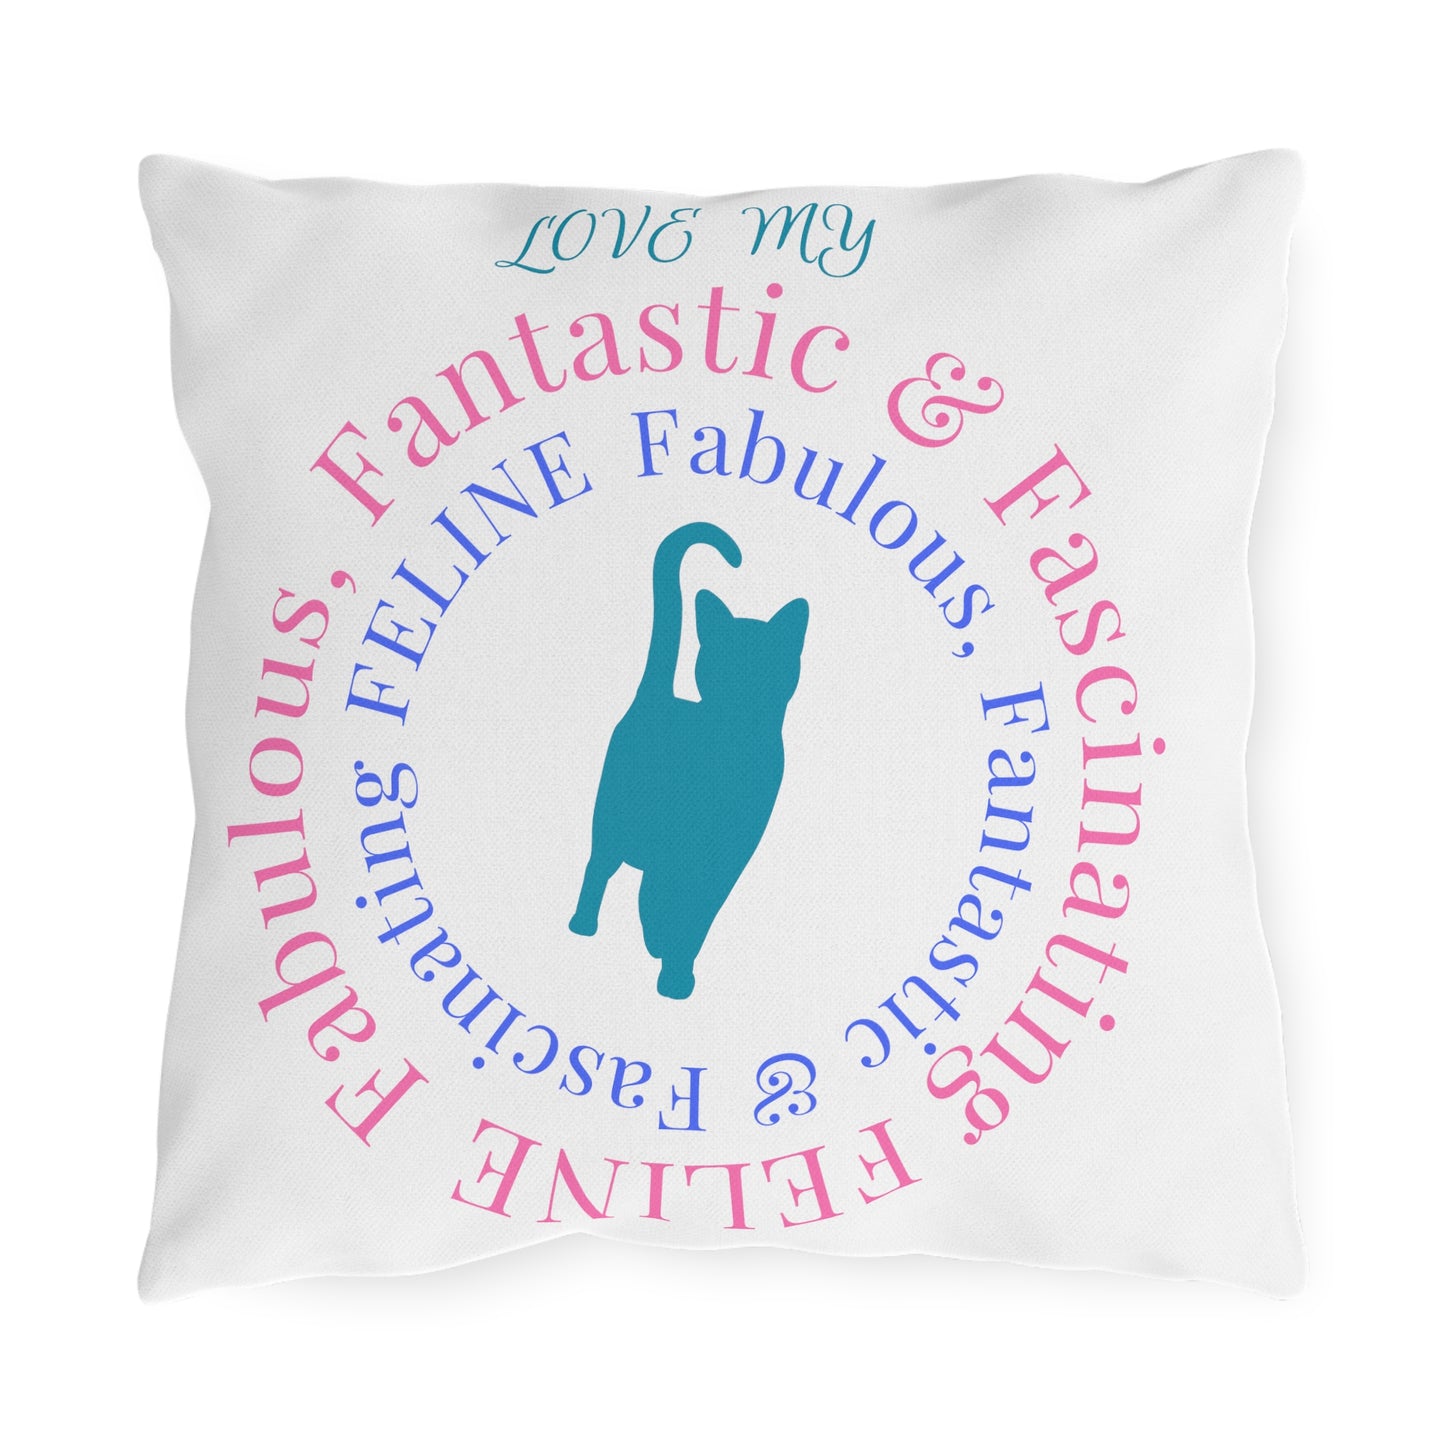 Pet-Lover Patio Pillow, "Fantastic-Fabulous-Fascinating-FELINE" Design, UV- and Mildew-Resistant